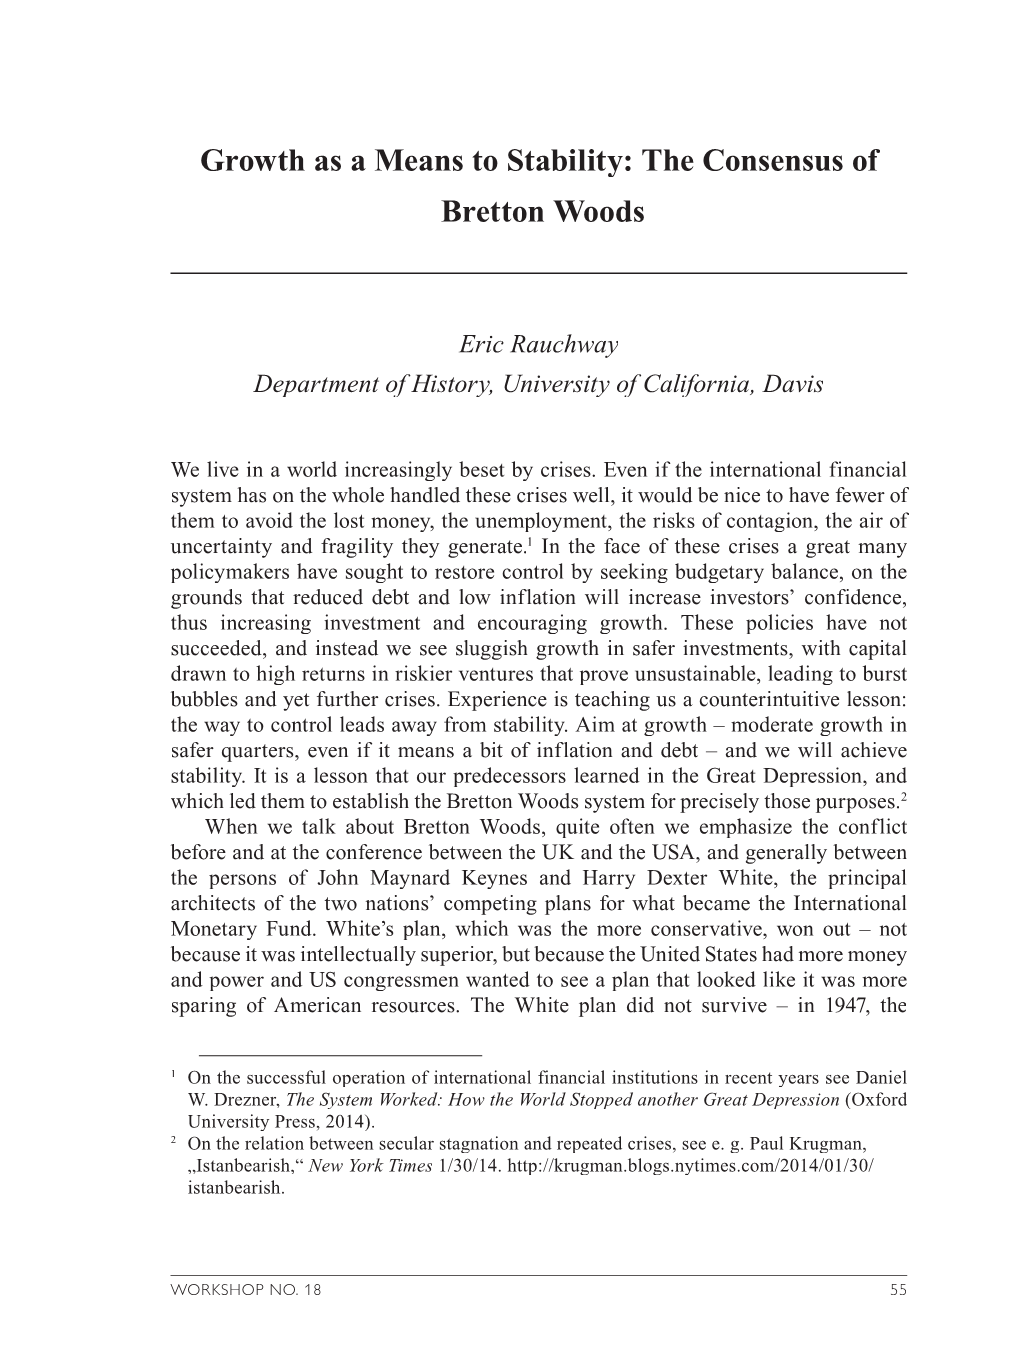 Workshops No 18 – Bretton Woods @ 70 Regaining Control of The